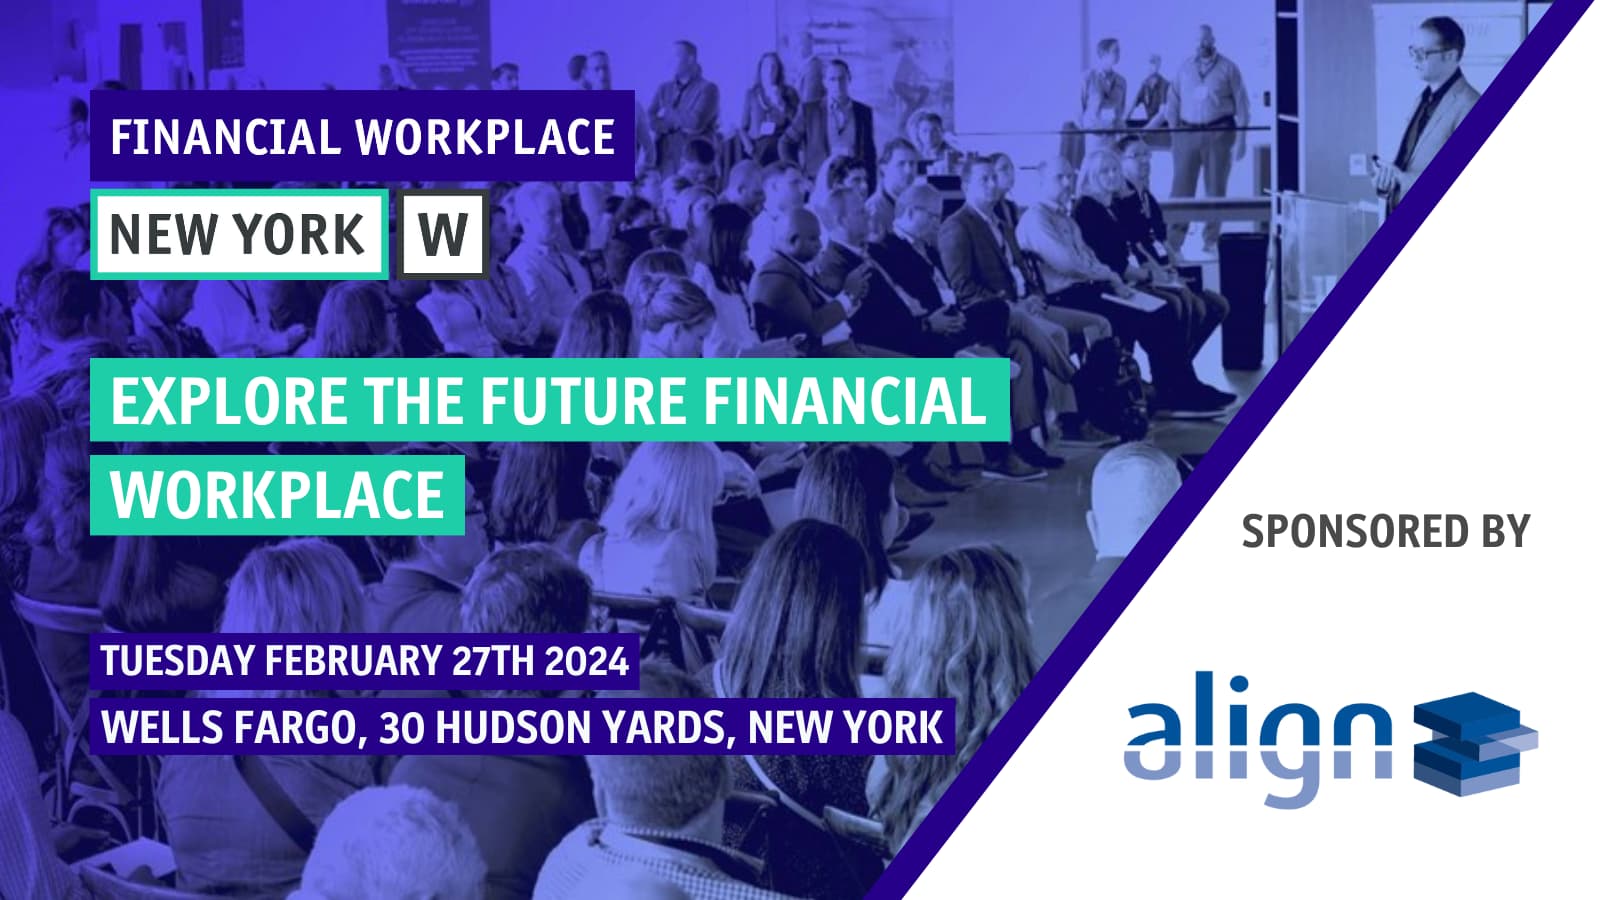 Financial Workplace New York, A WORKTECH Event